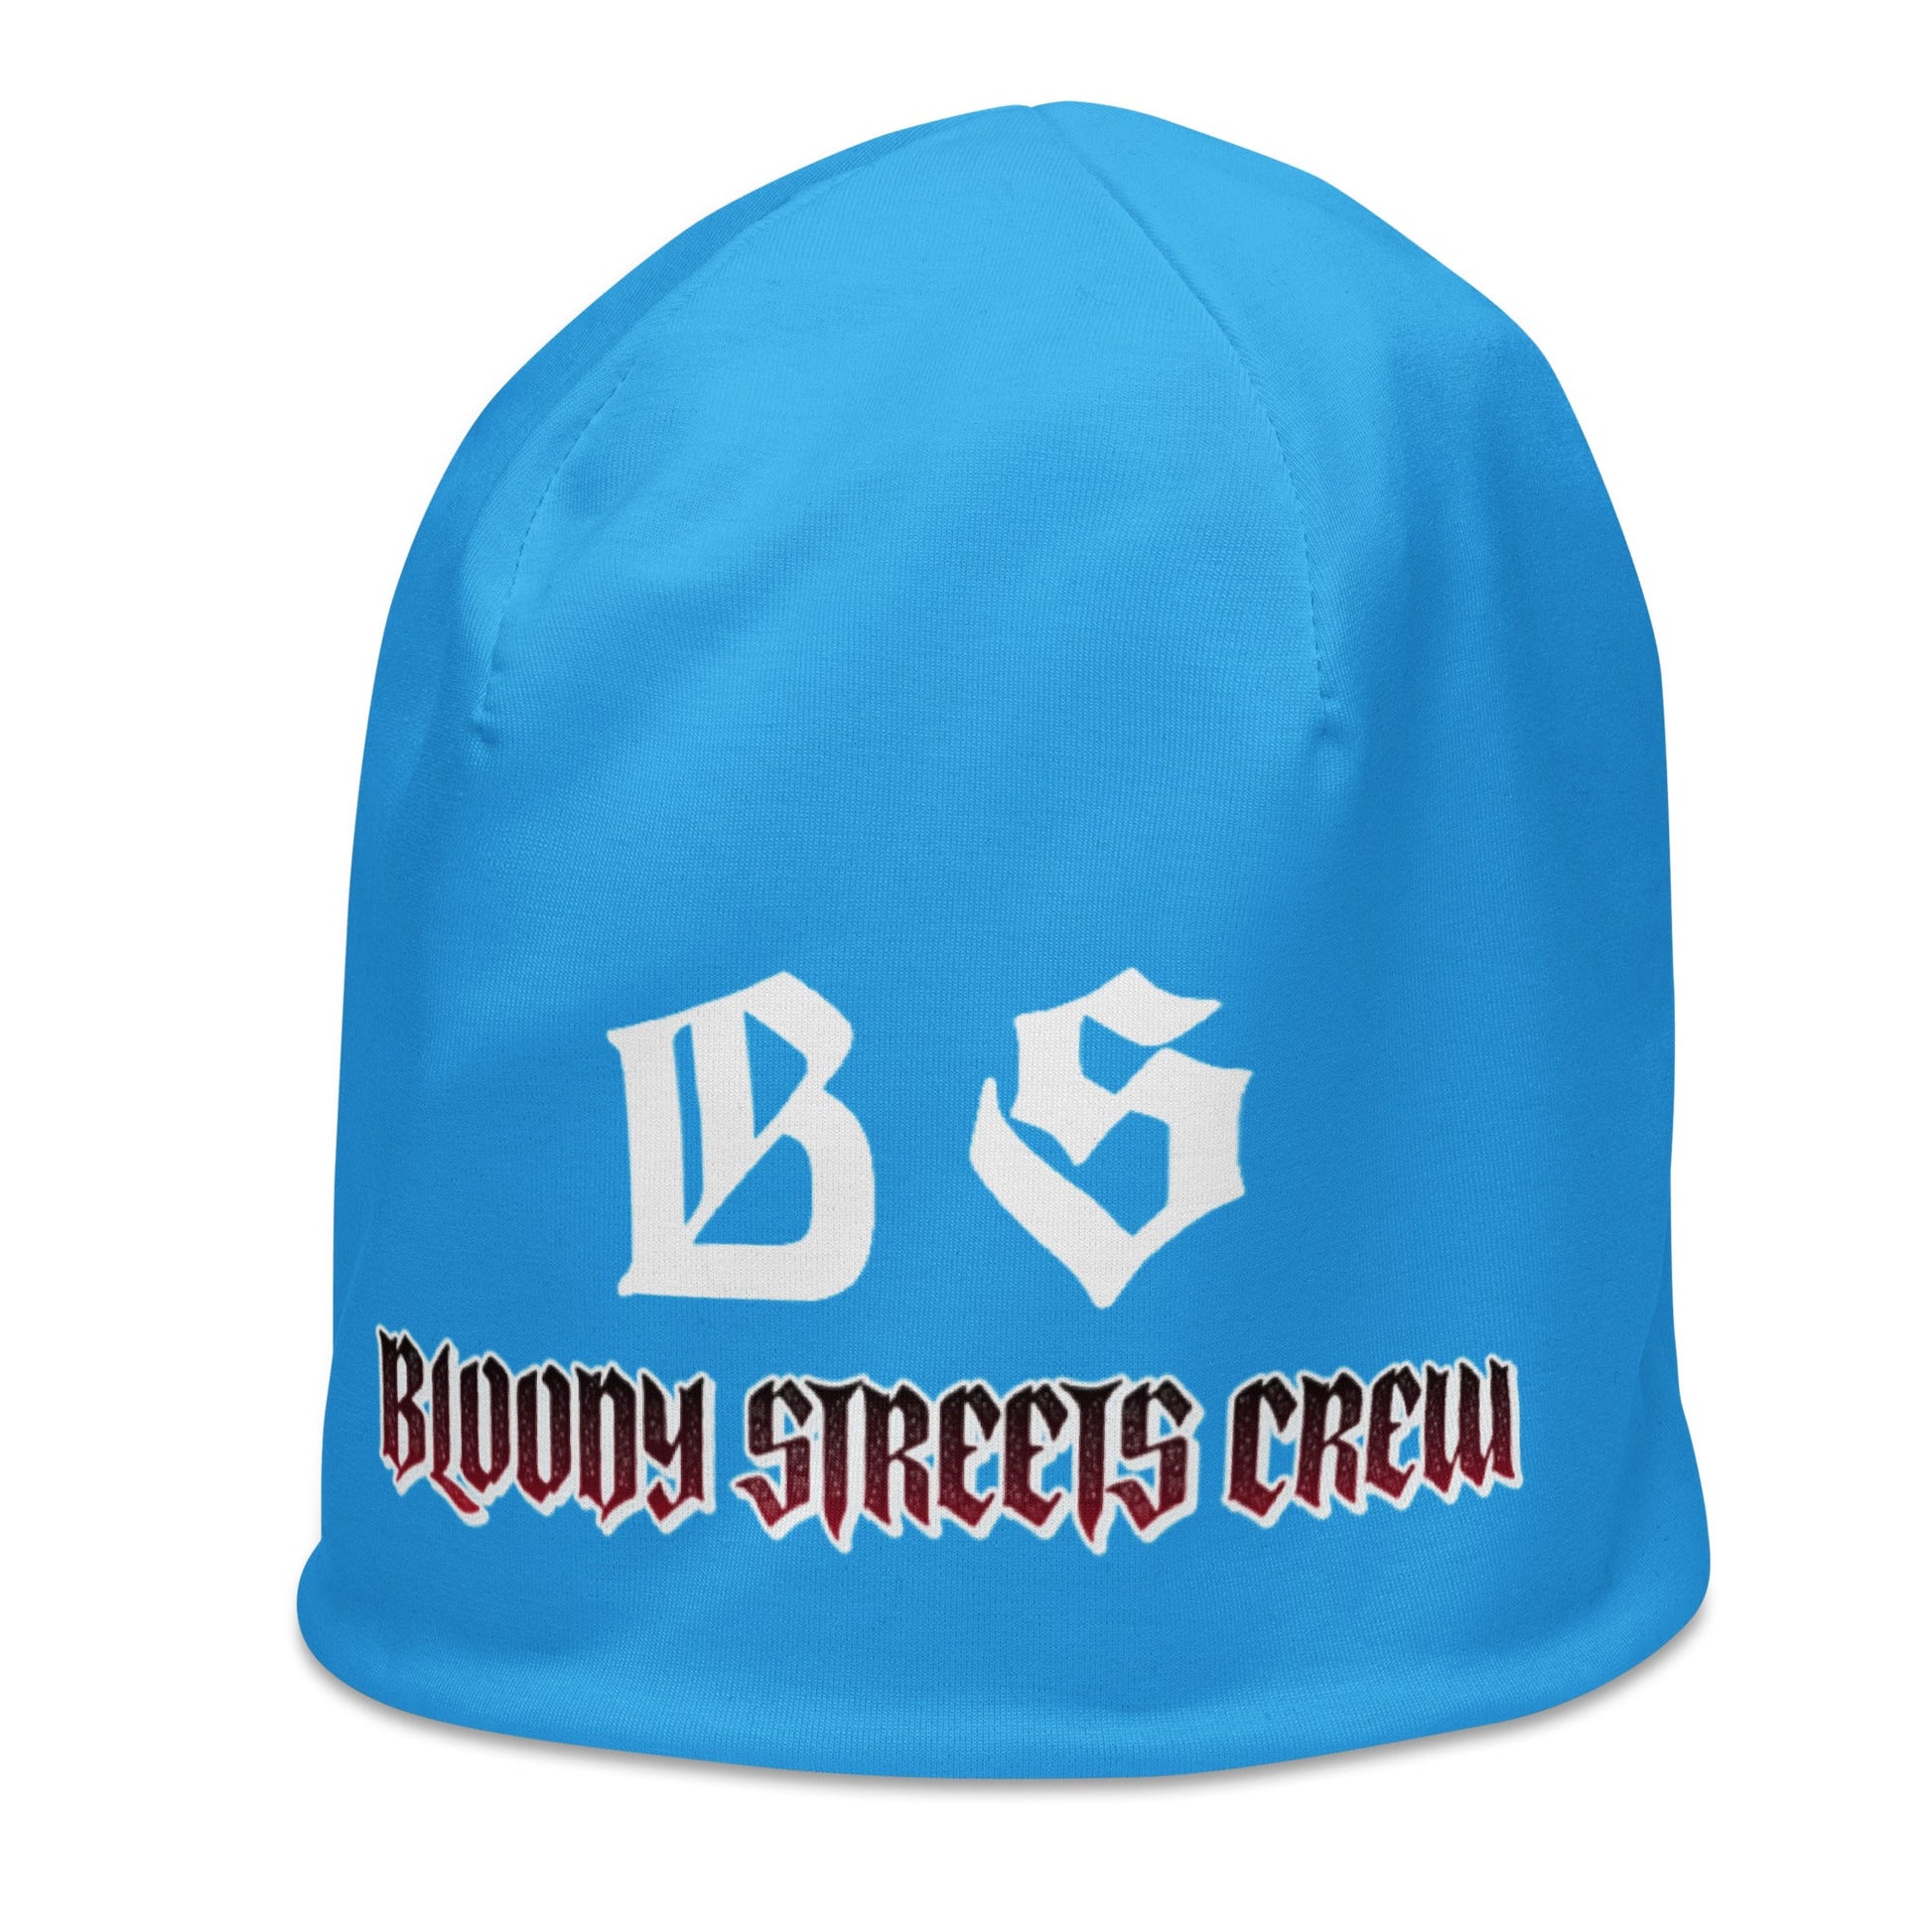 Bloody Streets Crew Member Beanie Blue - BLOODY-STREETS.DE Streetwear Herren und Damen Hoodies, T-Shirts, Pullis